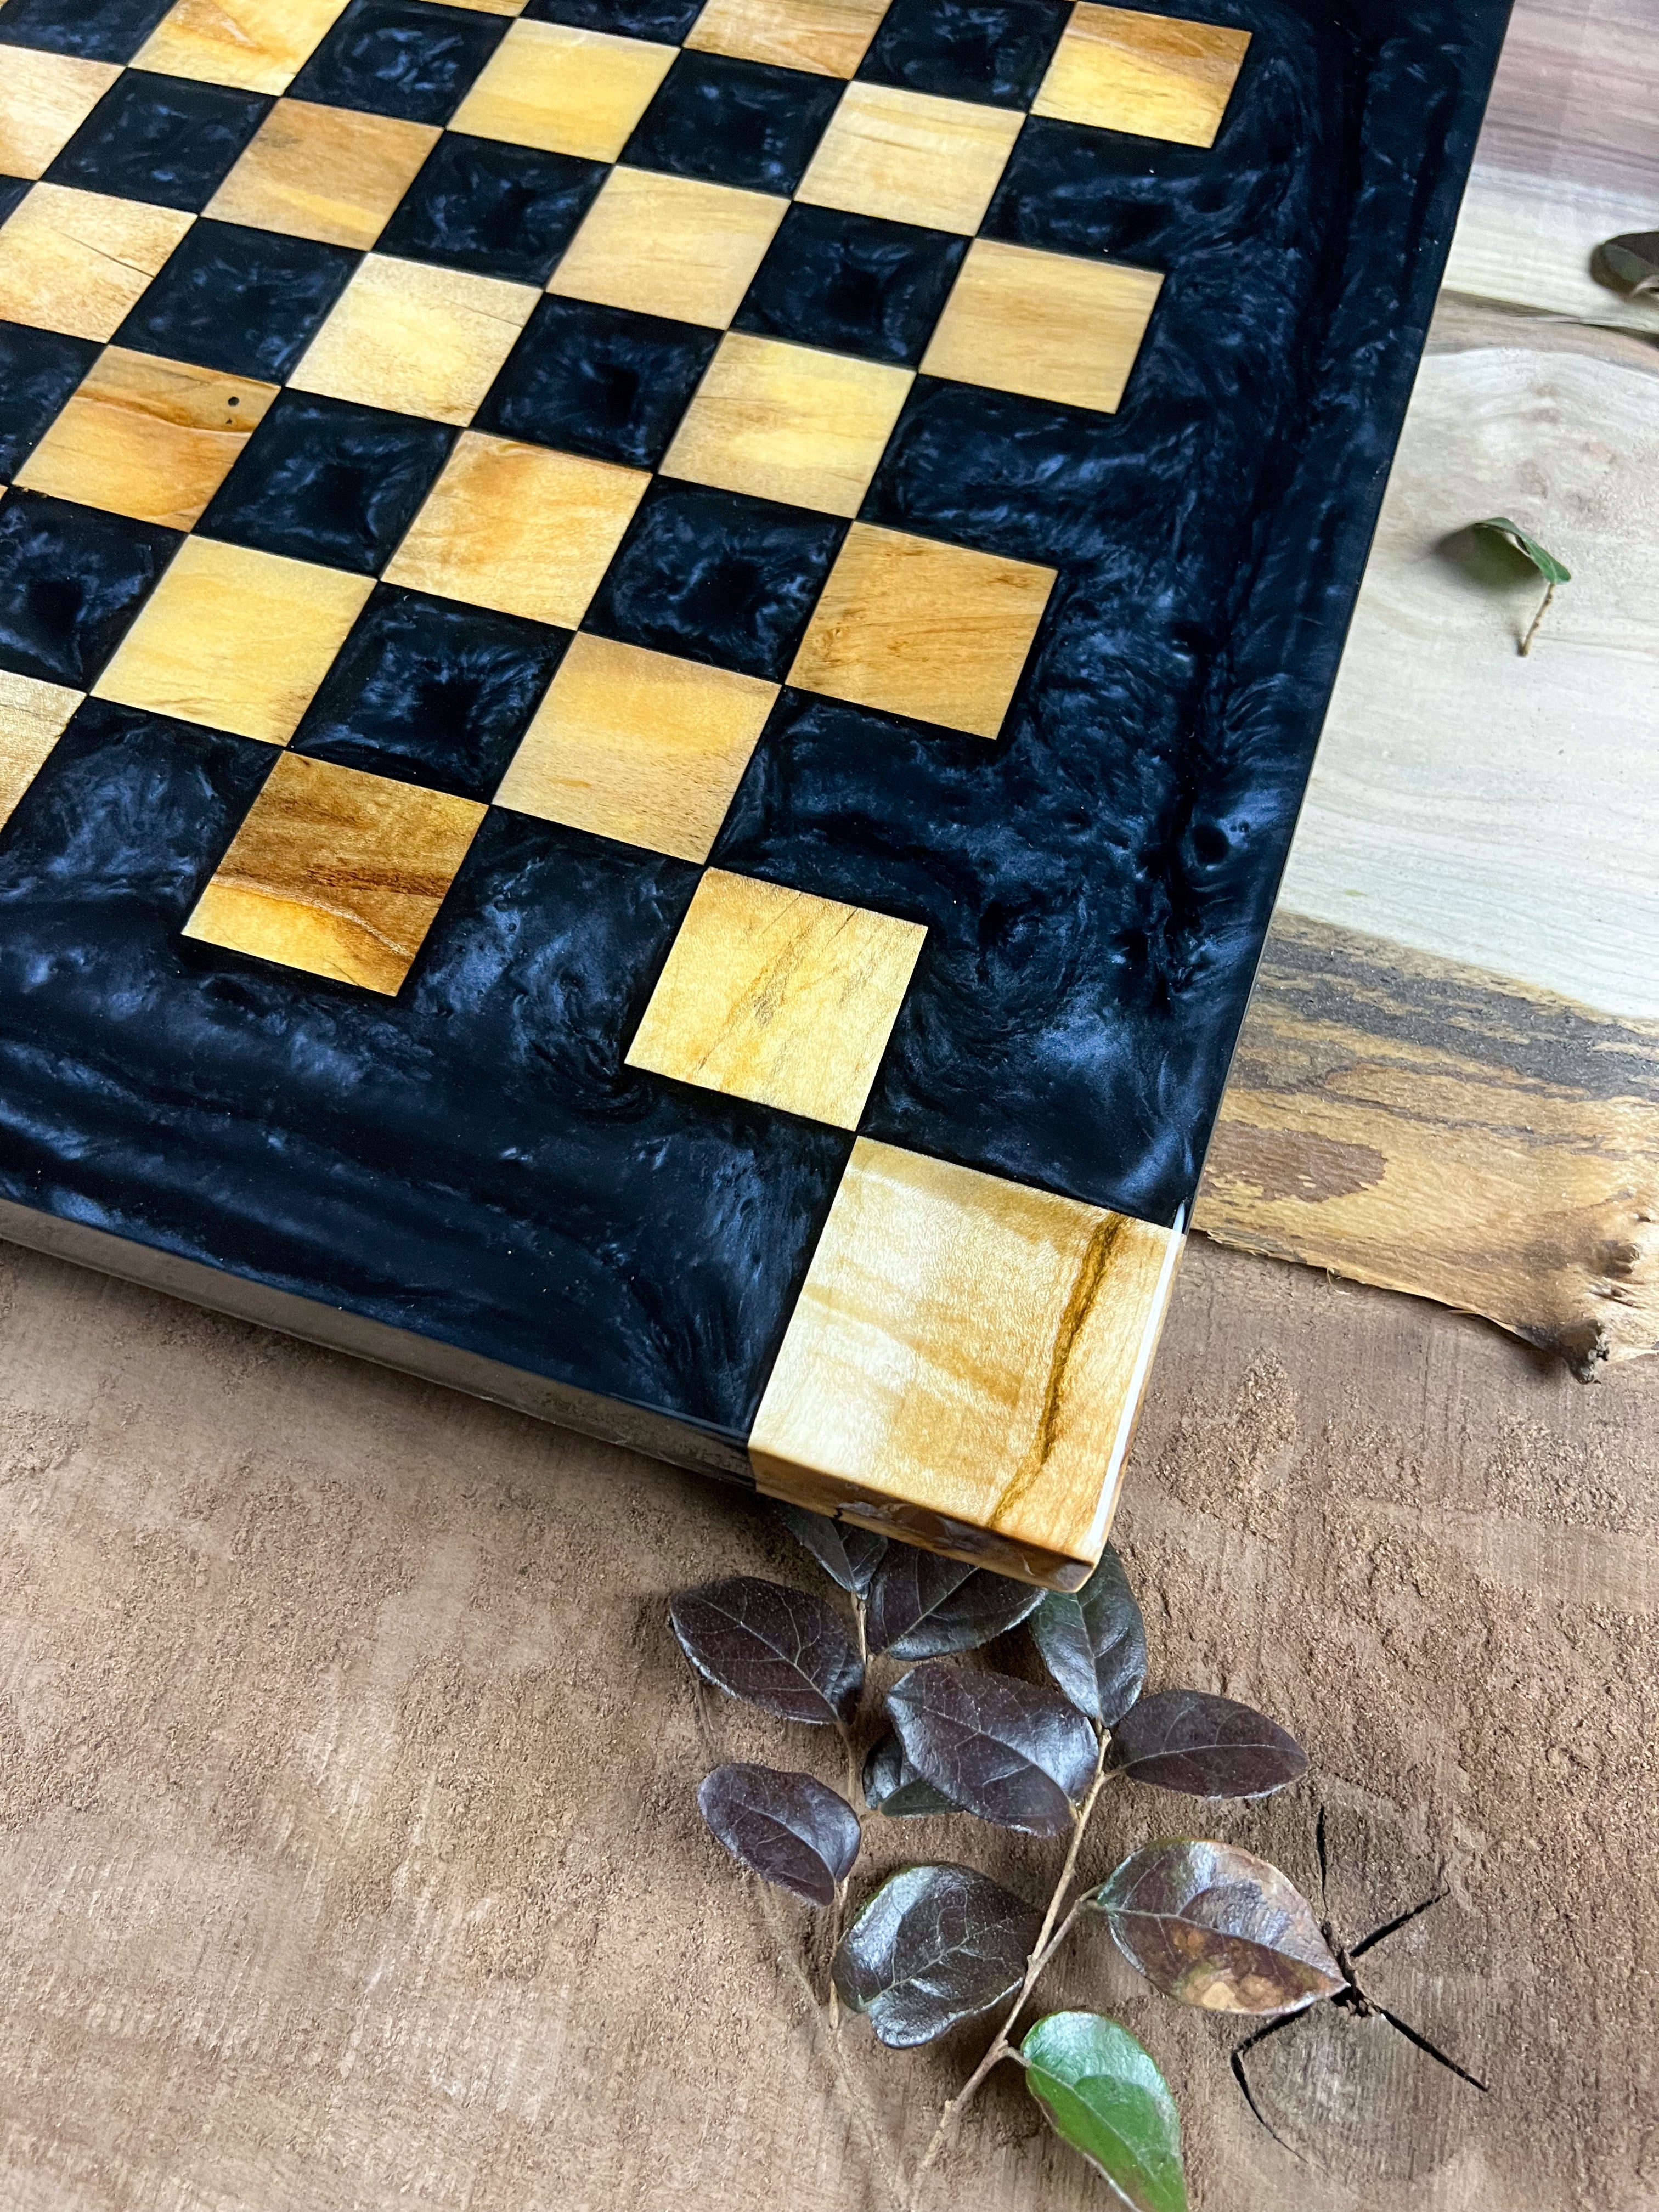 Maple Wood Black Onyx Chess Board